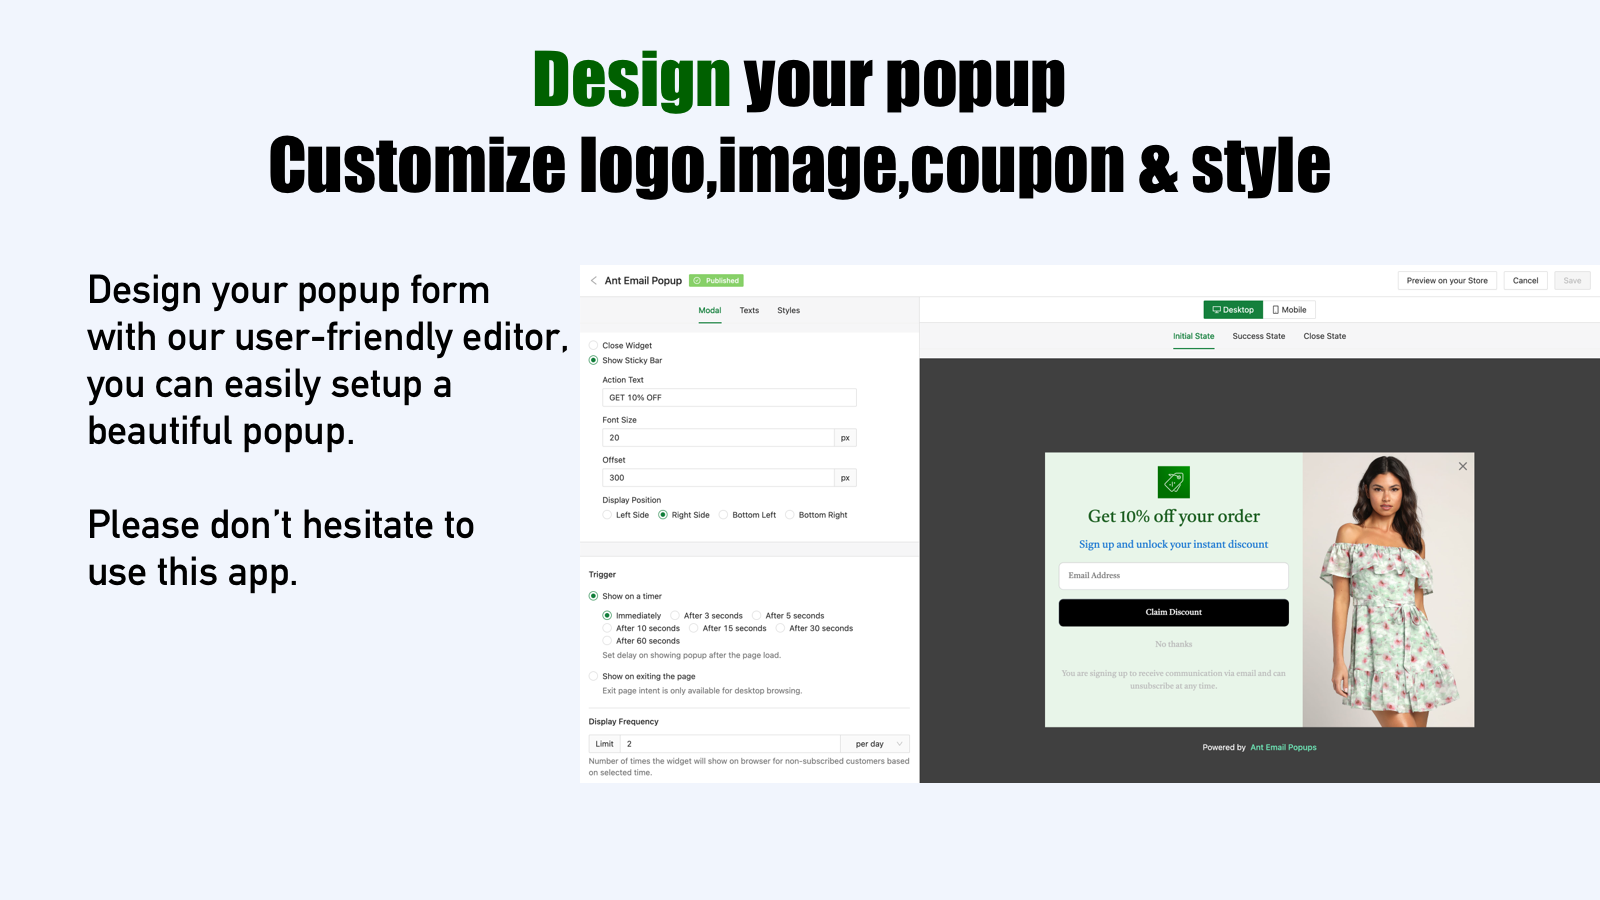 Design your popup